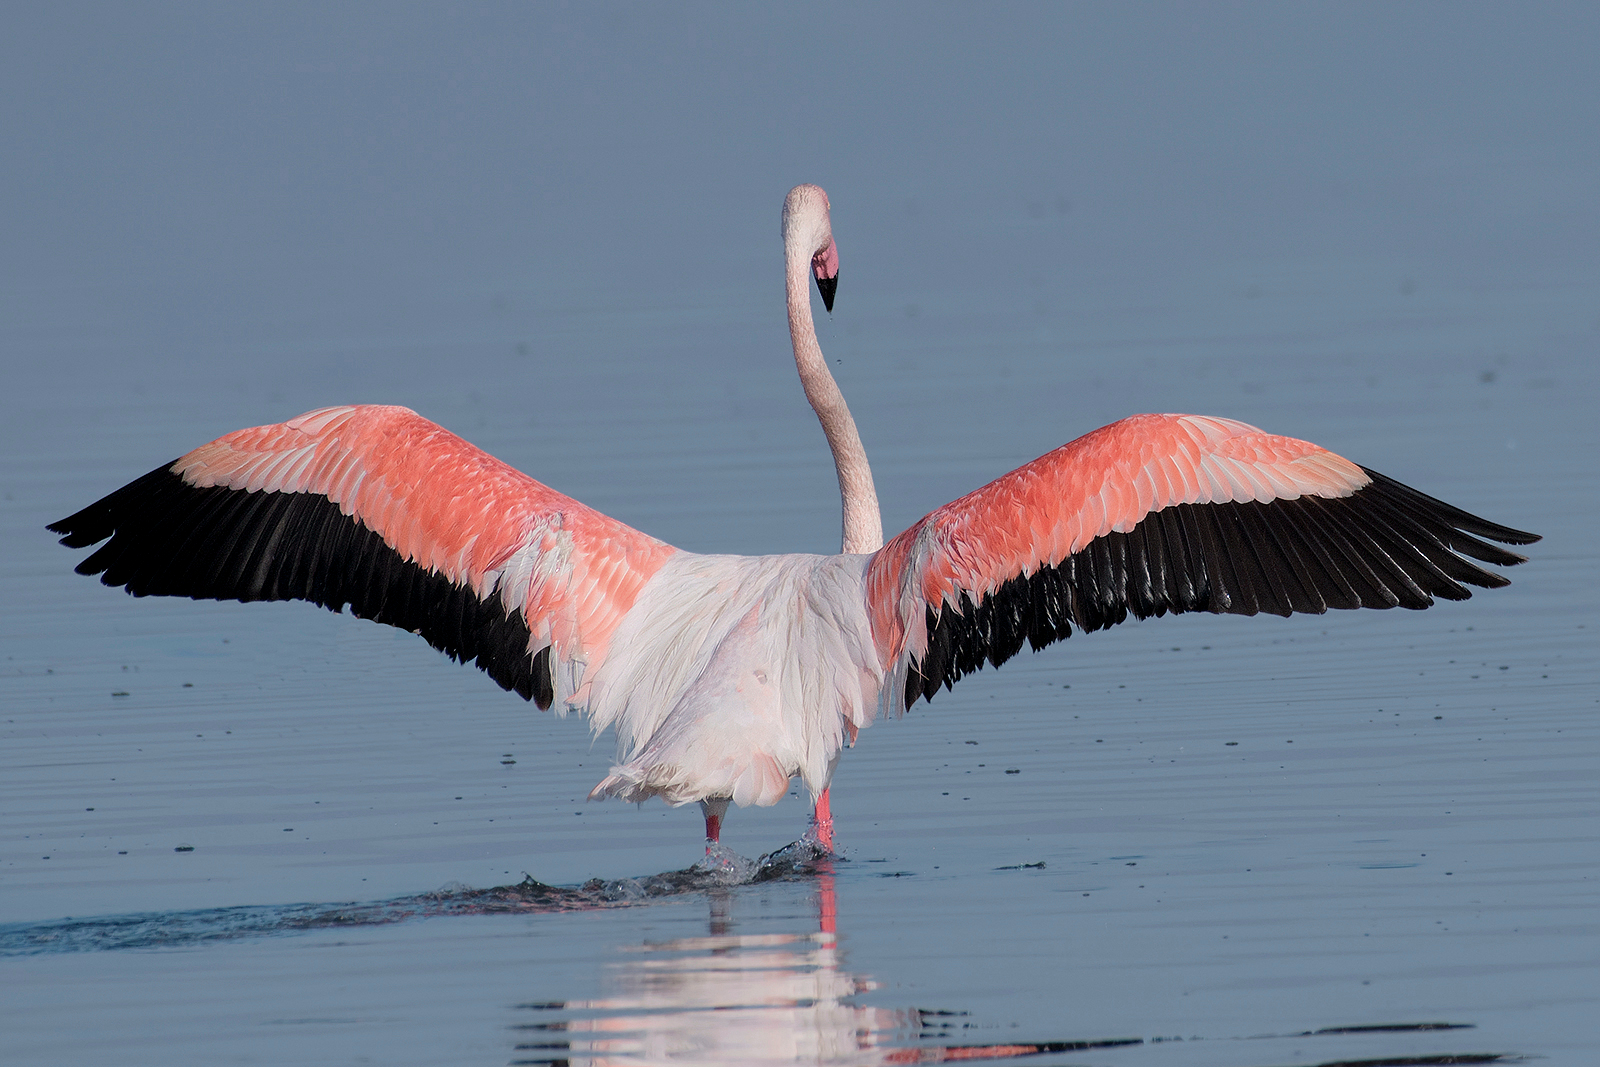 Side B (flamingo)...